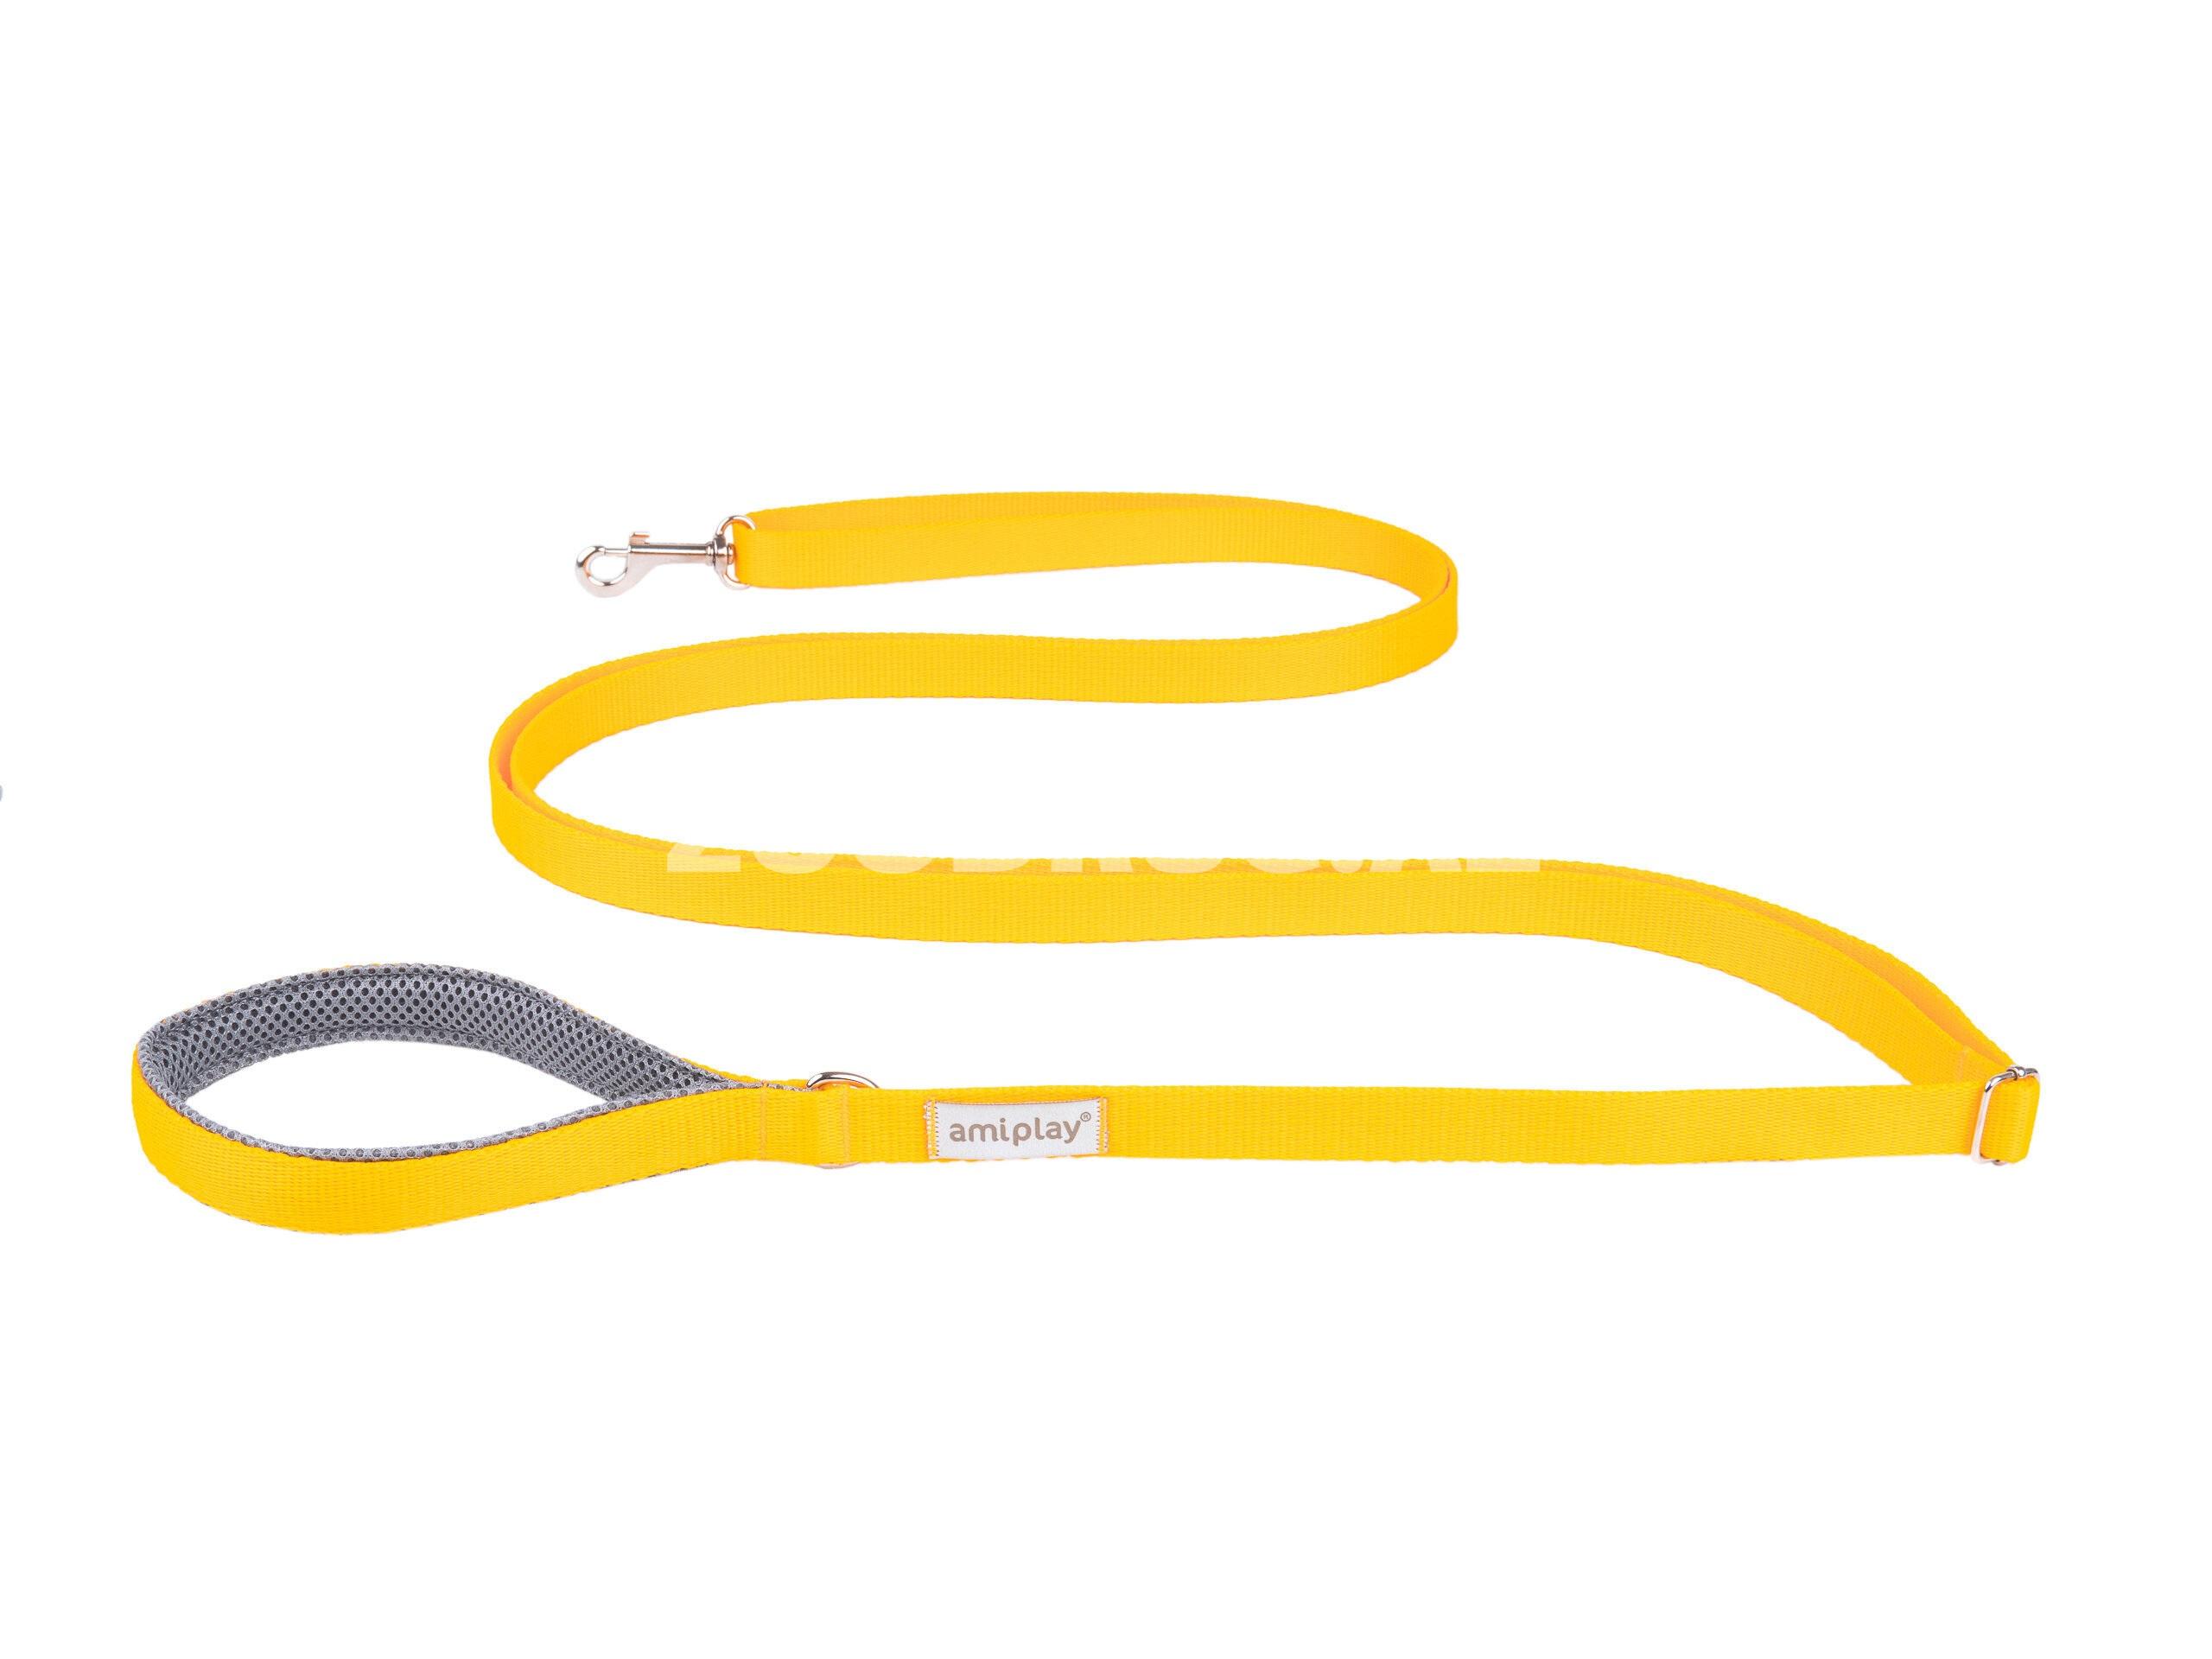 Поводок Amiplay Adjustable Leash easy fix. Цвет: Желтый. Размер S. Длина 160-300 x 1.5 см.